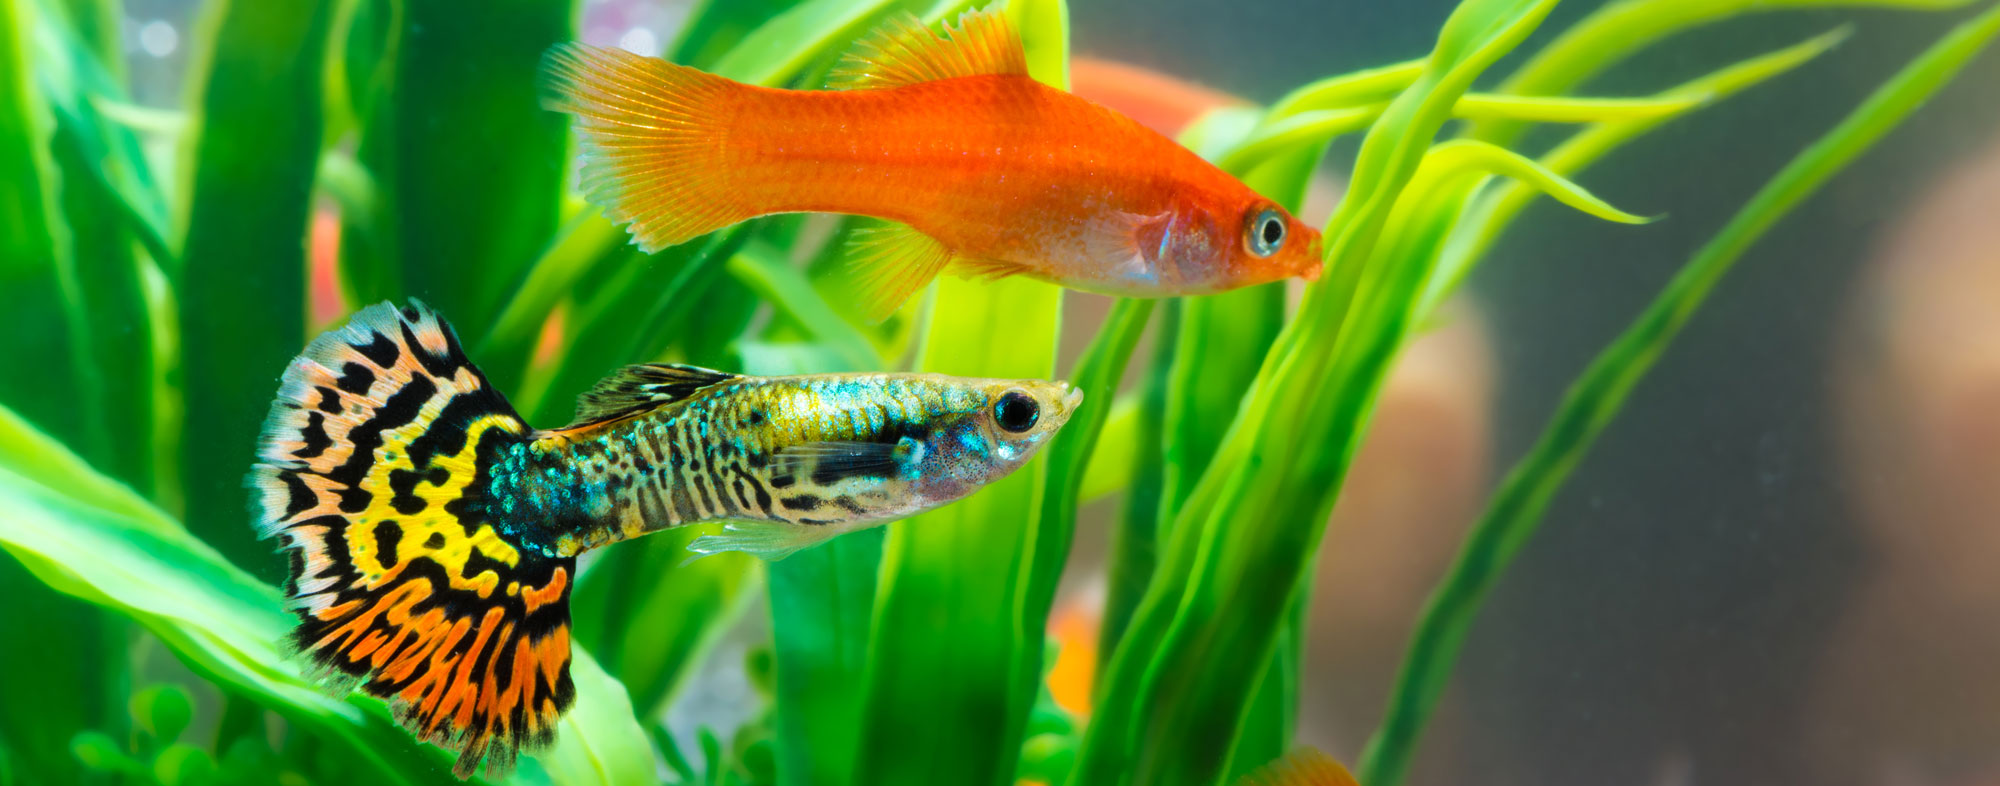 Pair of fish swimming in an aquarium with fluorescent lighting